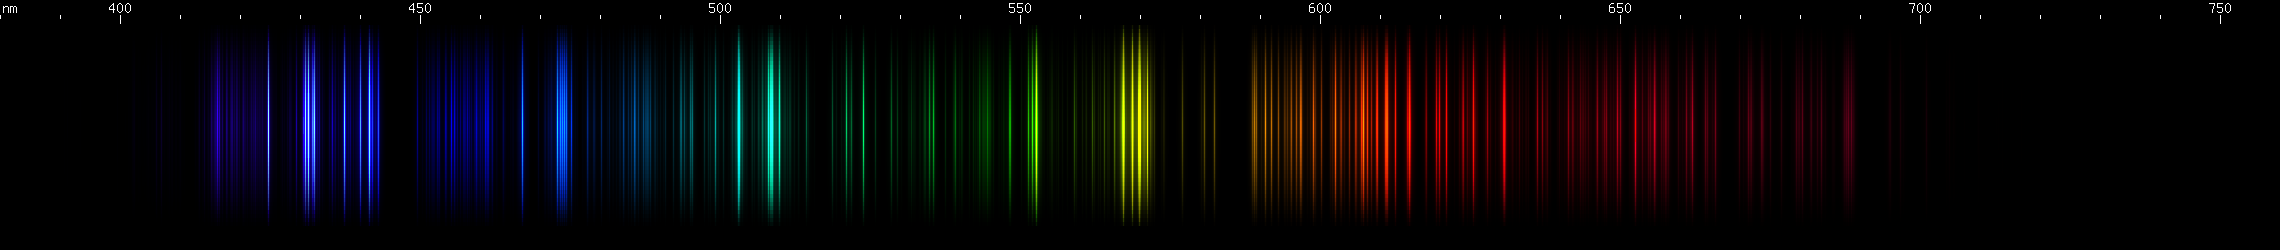 Spectral lines of Scandium.